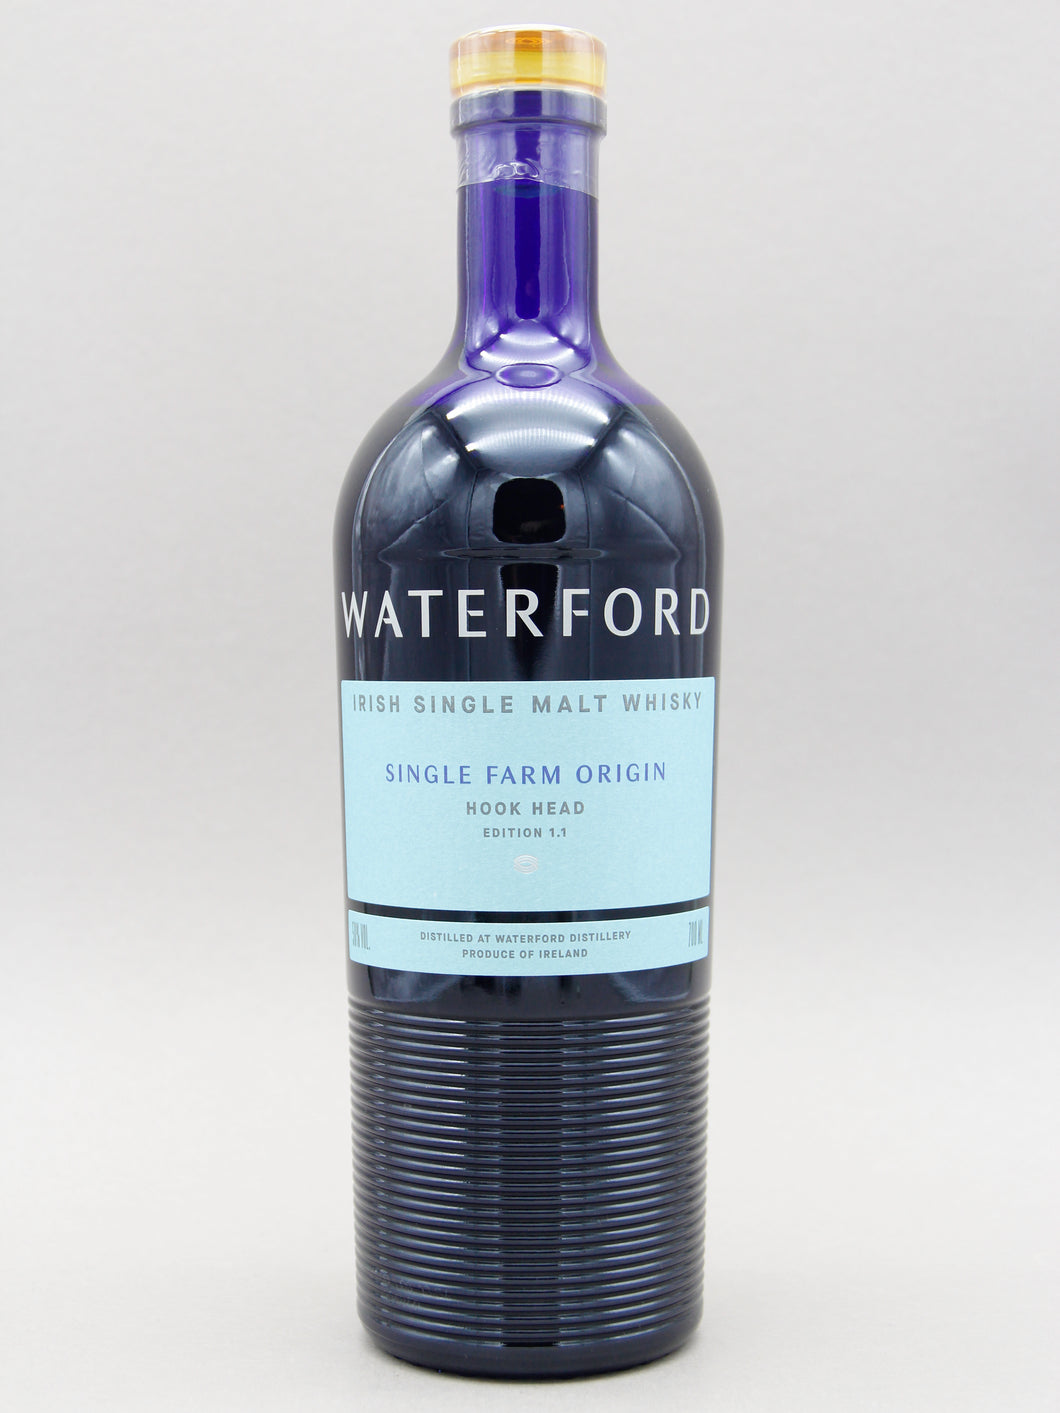 Waterford, Irish Single Malt Whiskey, Single Farm Origin, Hook Head, Edition 1.1 (50%, 70cl)